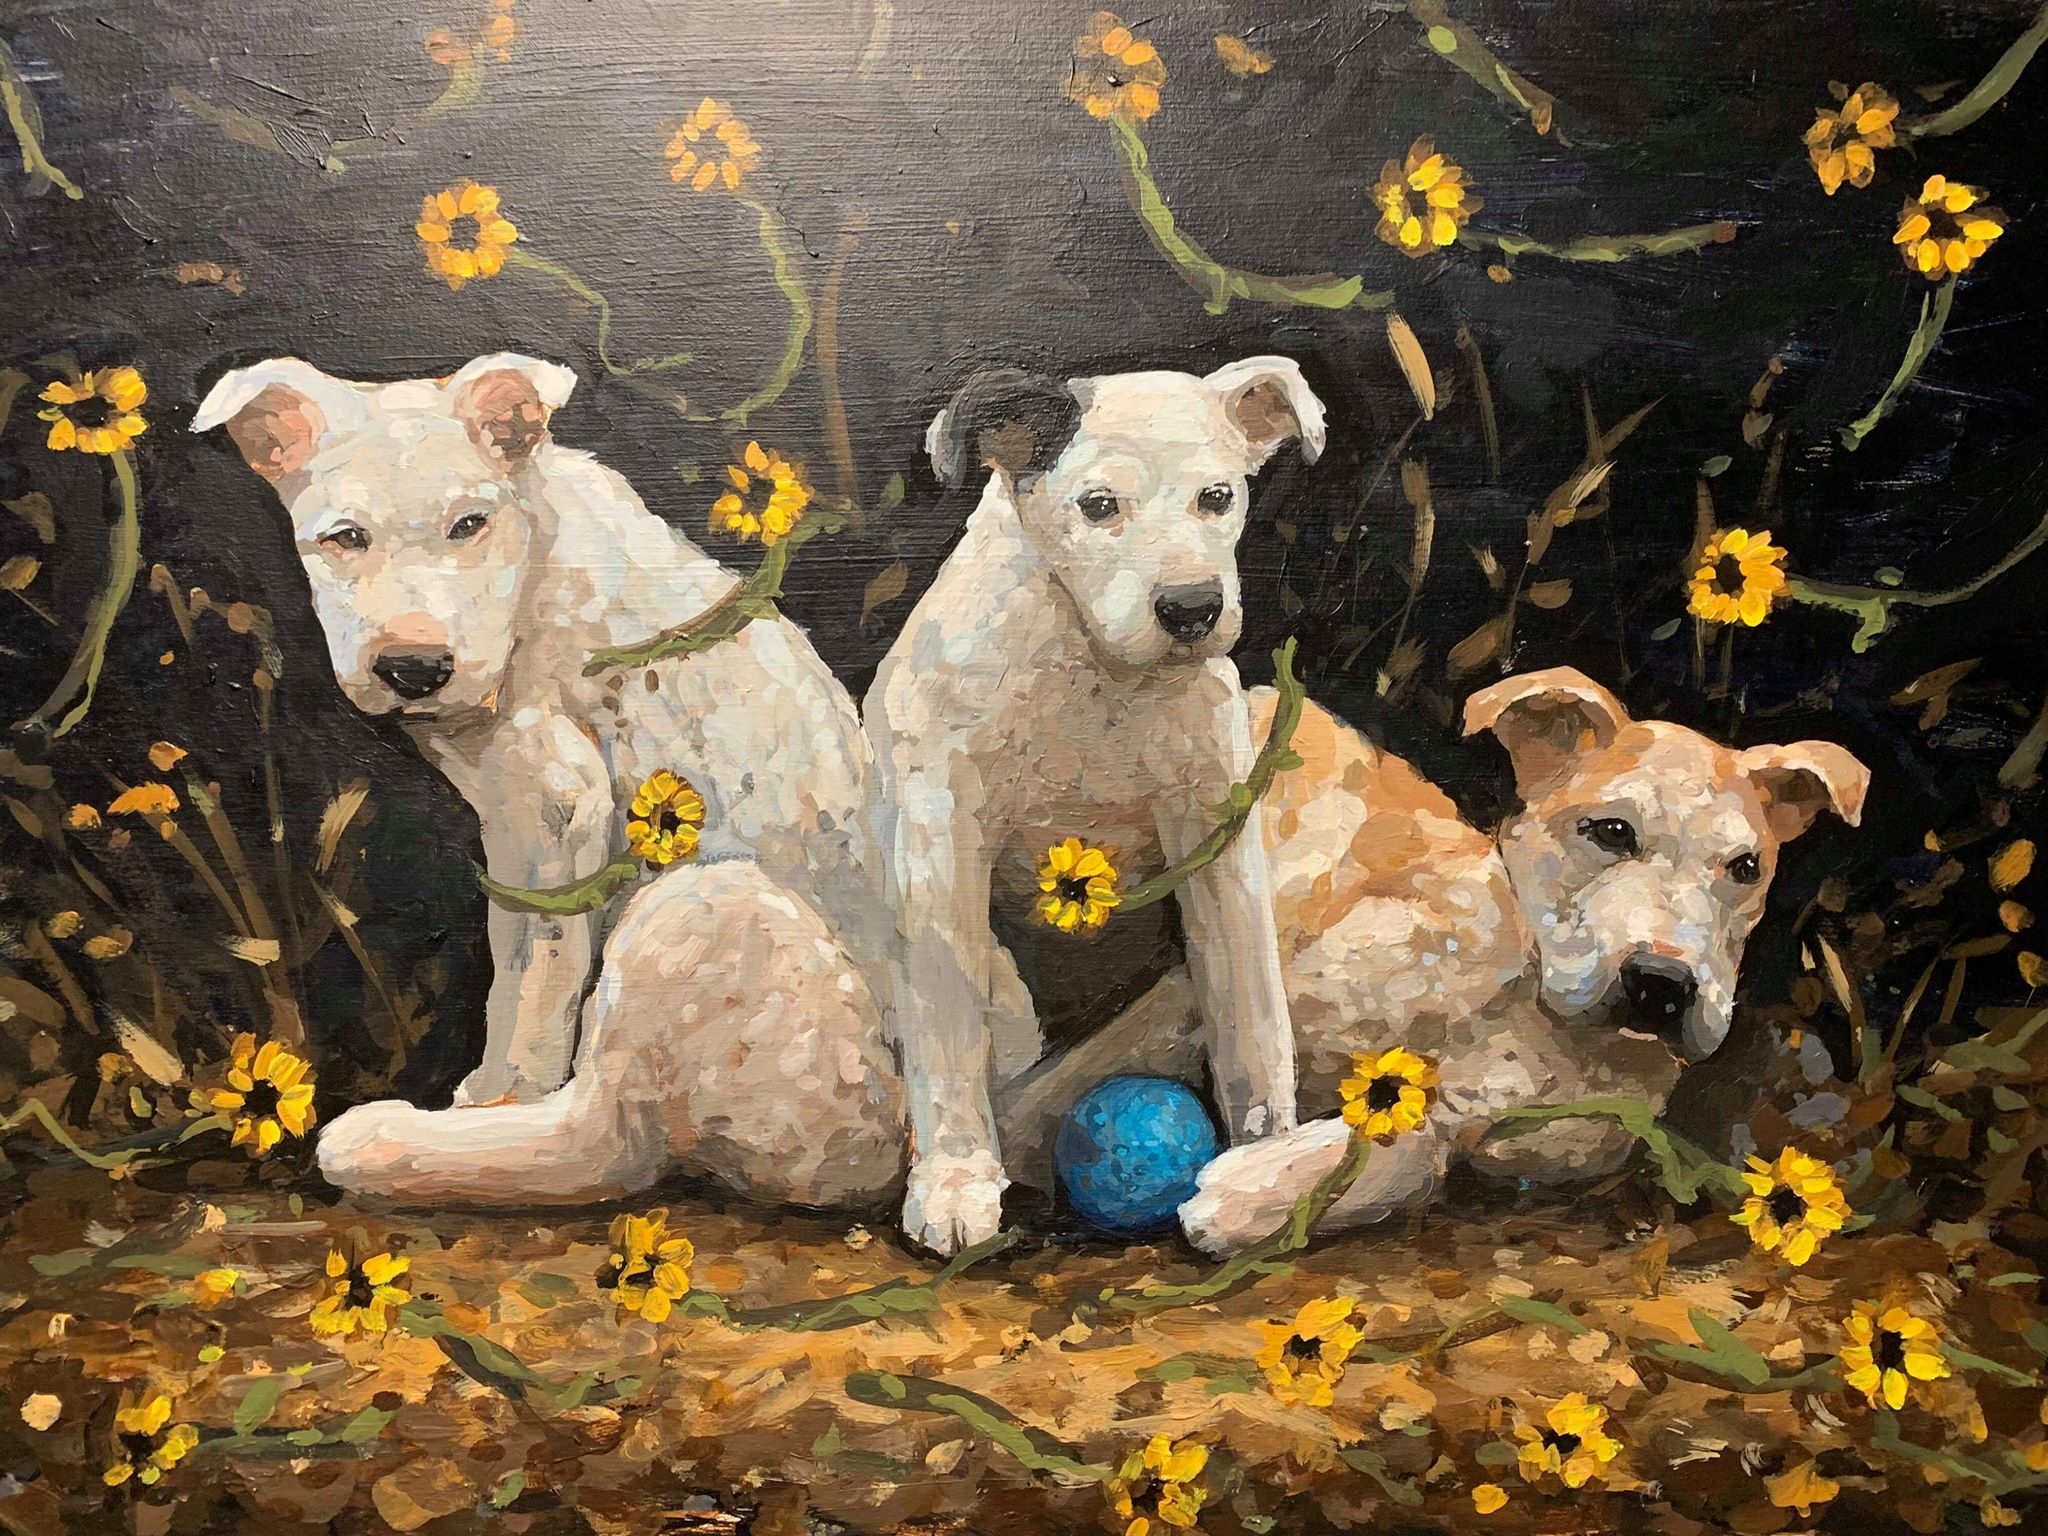 3 Rez Dogs with a Handball, 2019